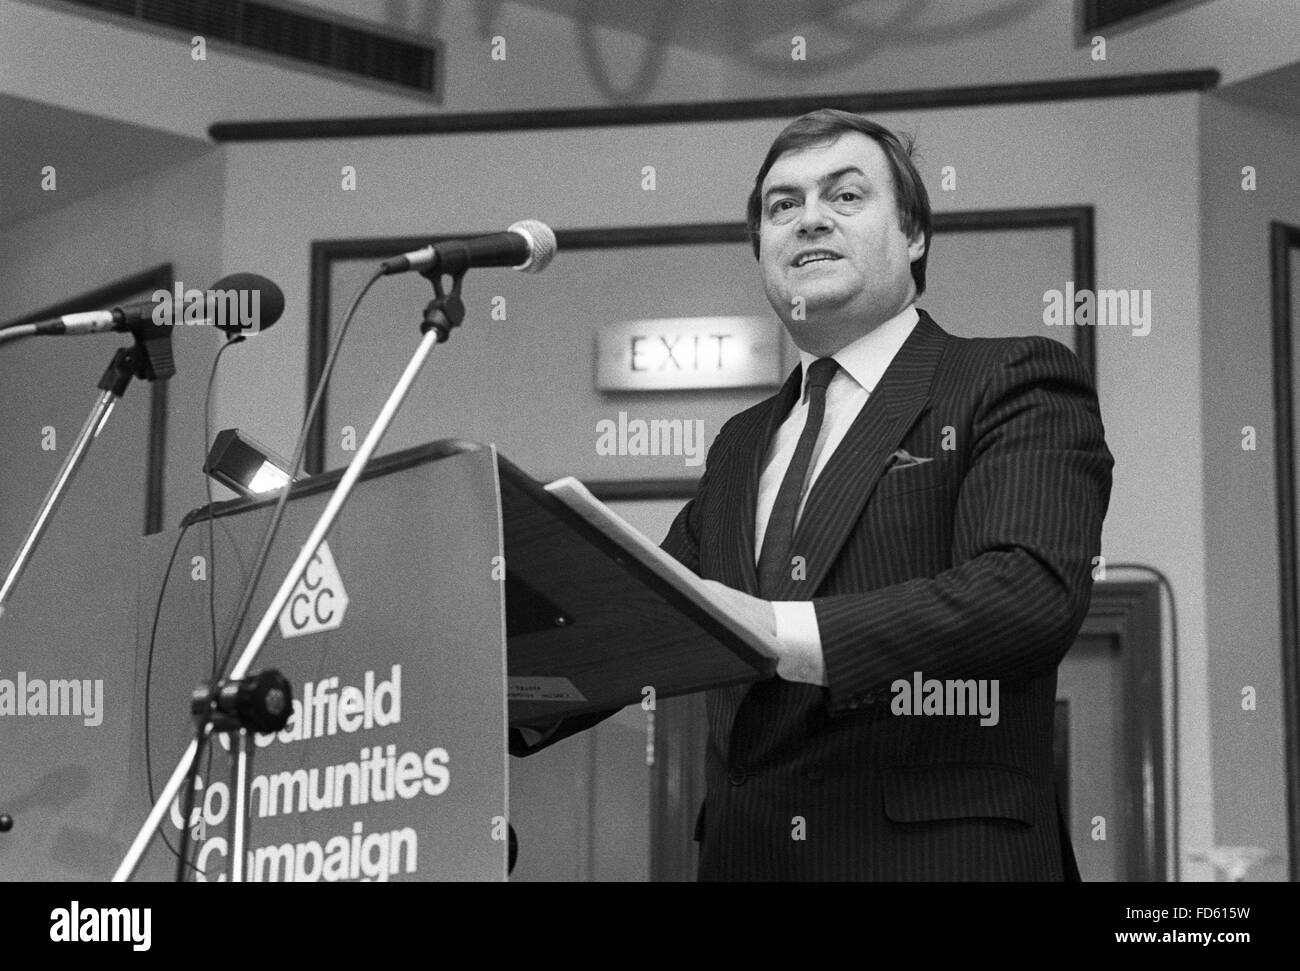 John Prescott speaking to the Coalfield Communities Campaign Conference in Edinburgh, 1988 Stock Photo